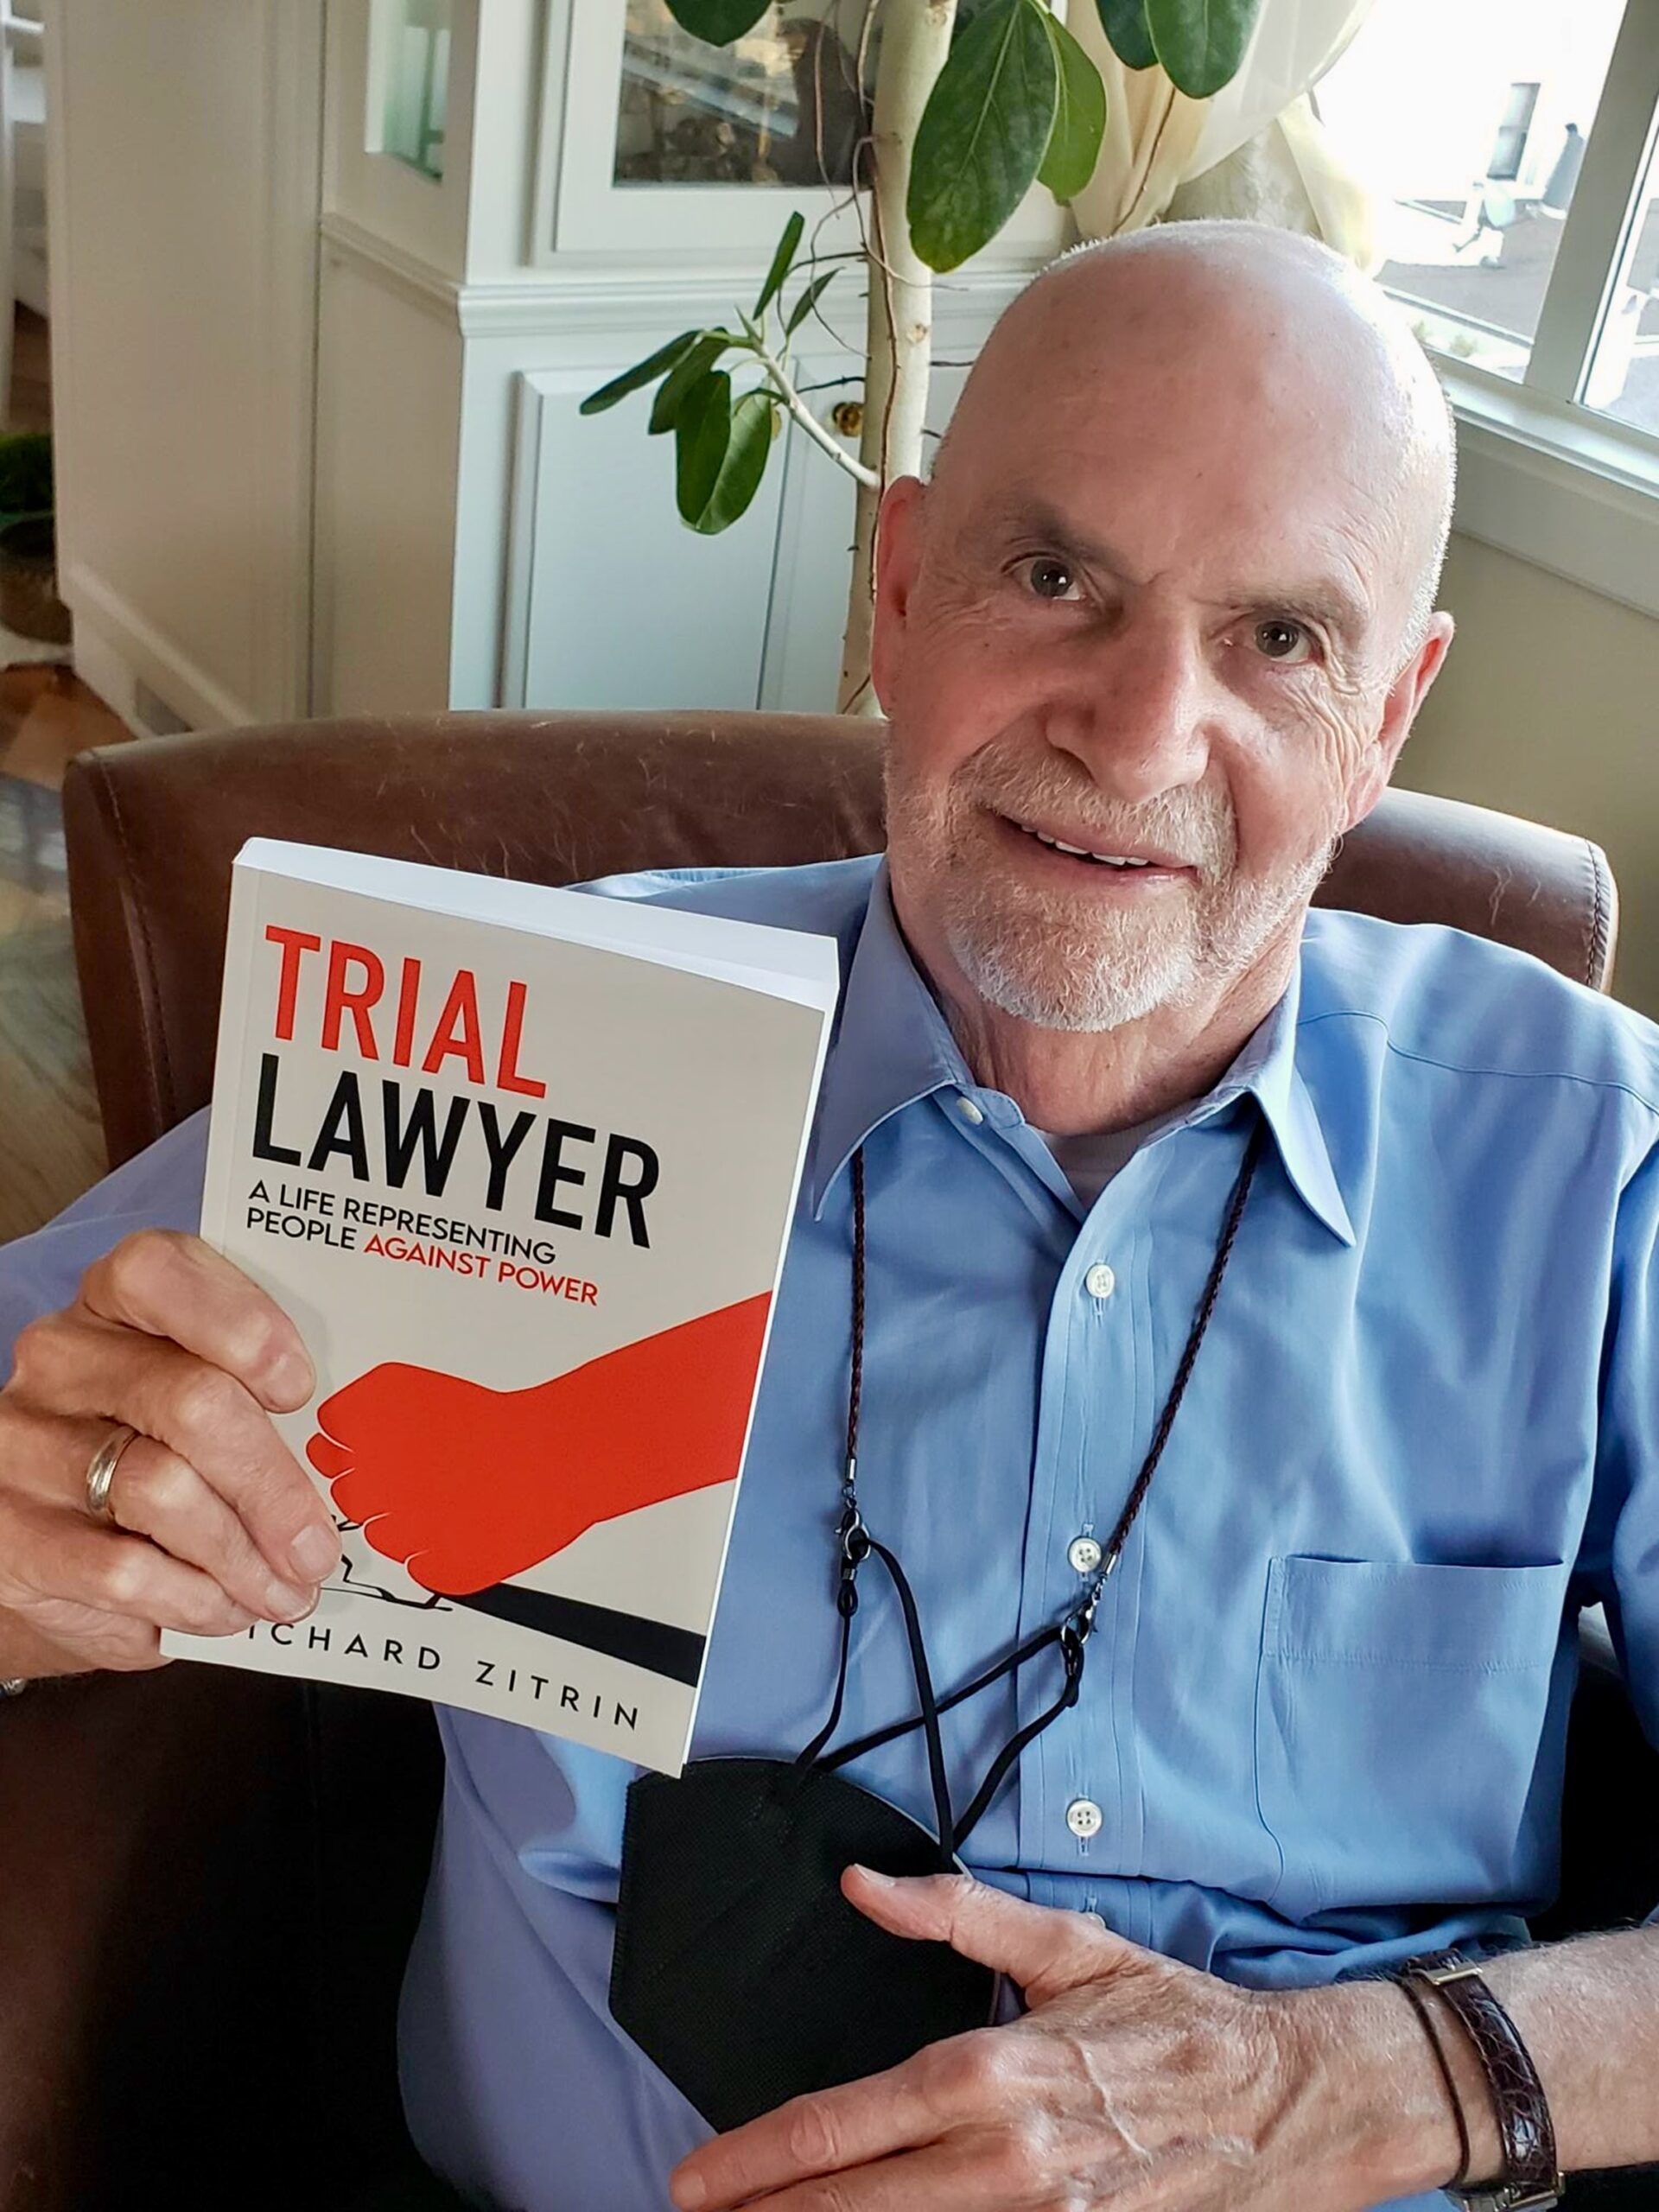 bald law professor holds book